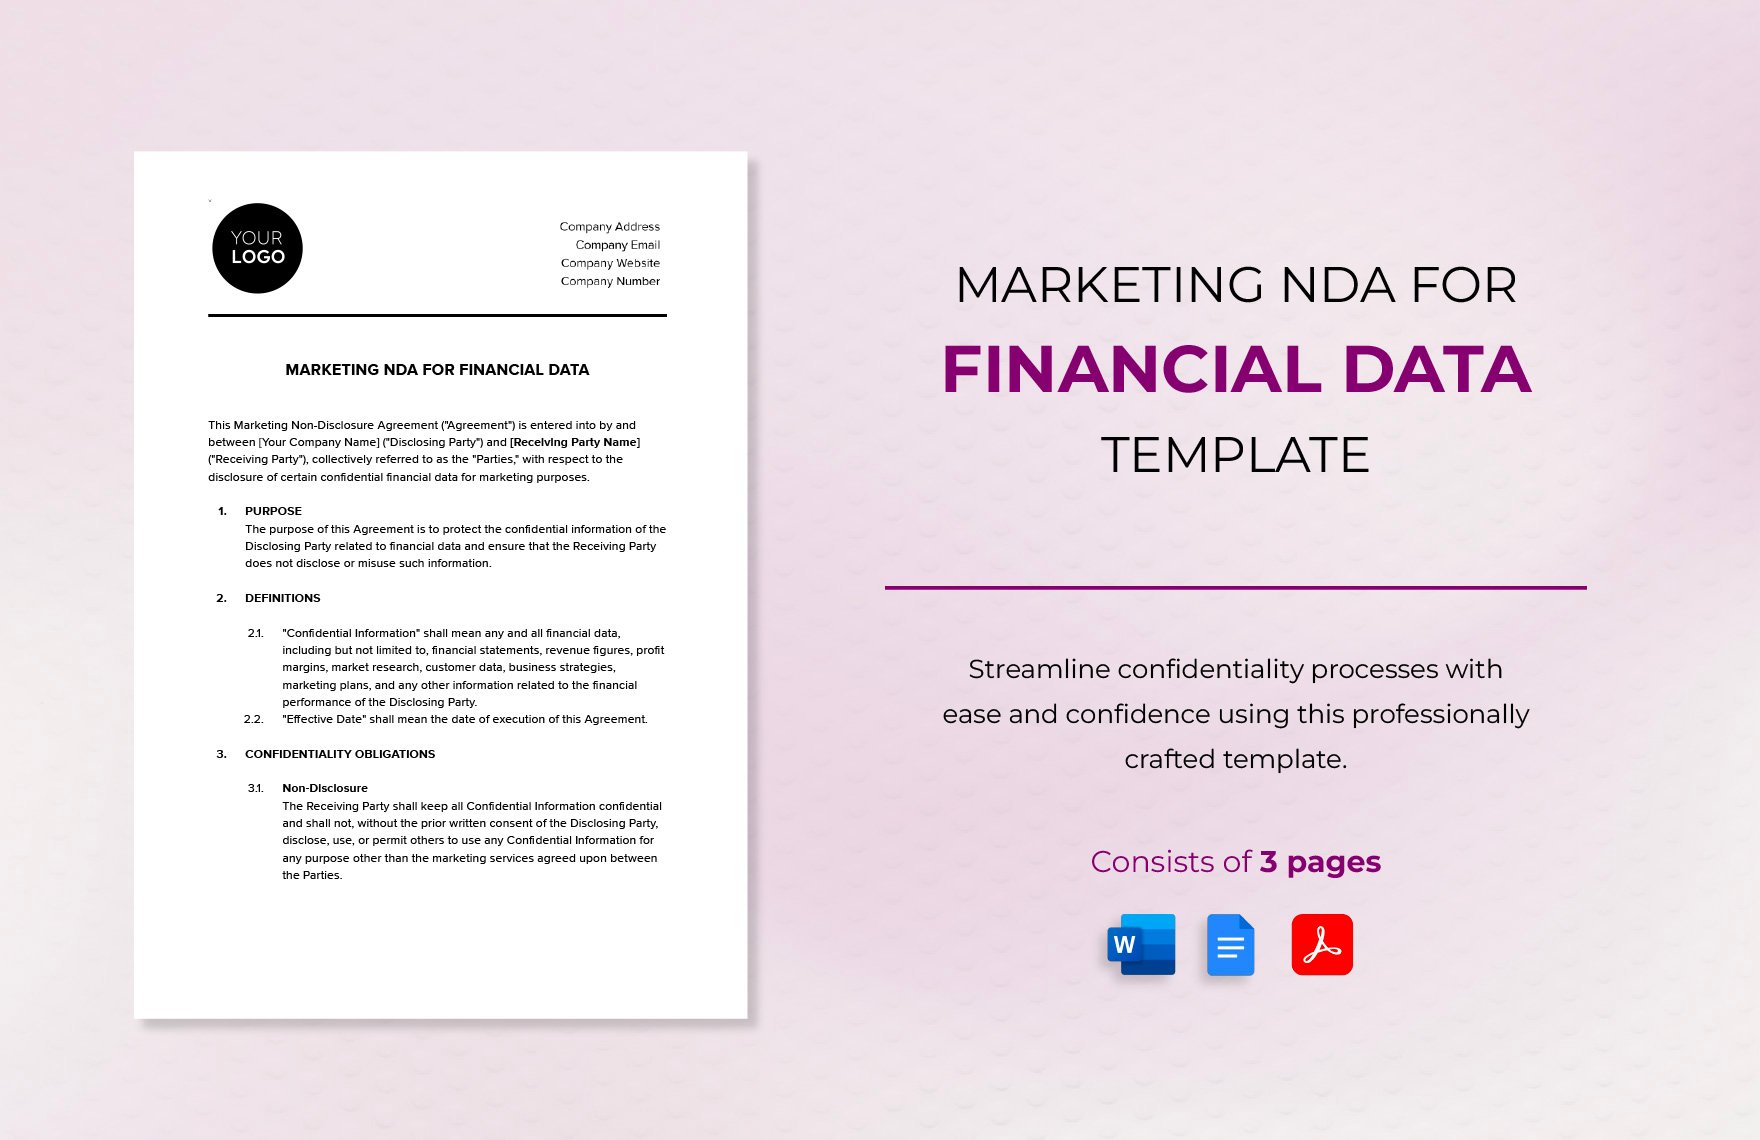 Marketing NDA for Financial Data Template